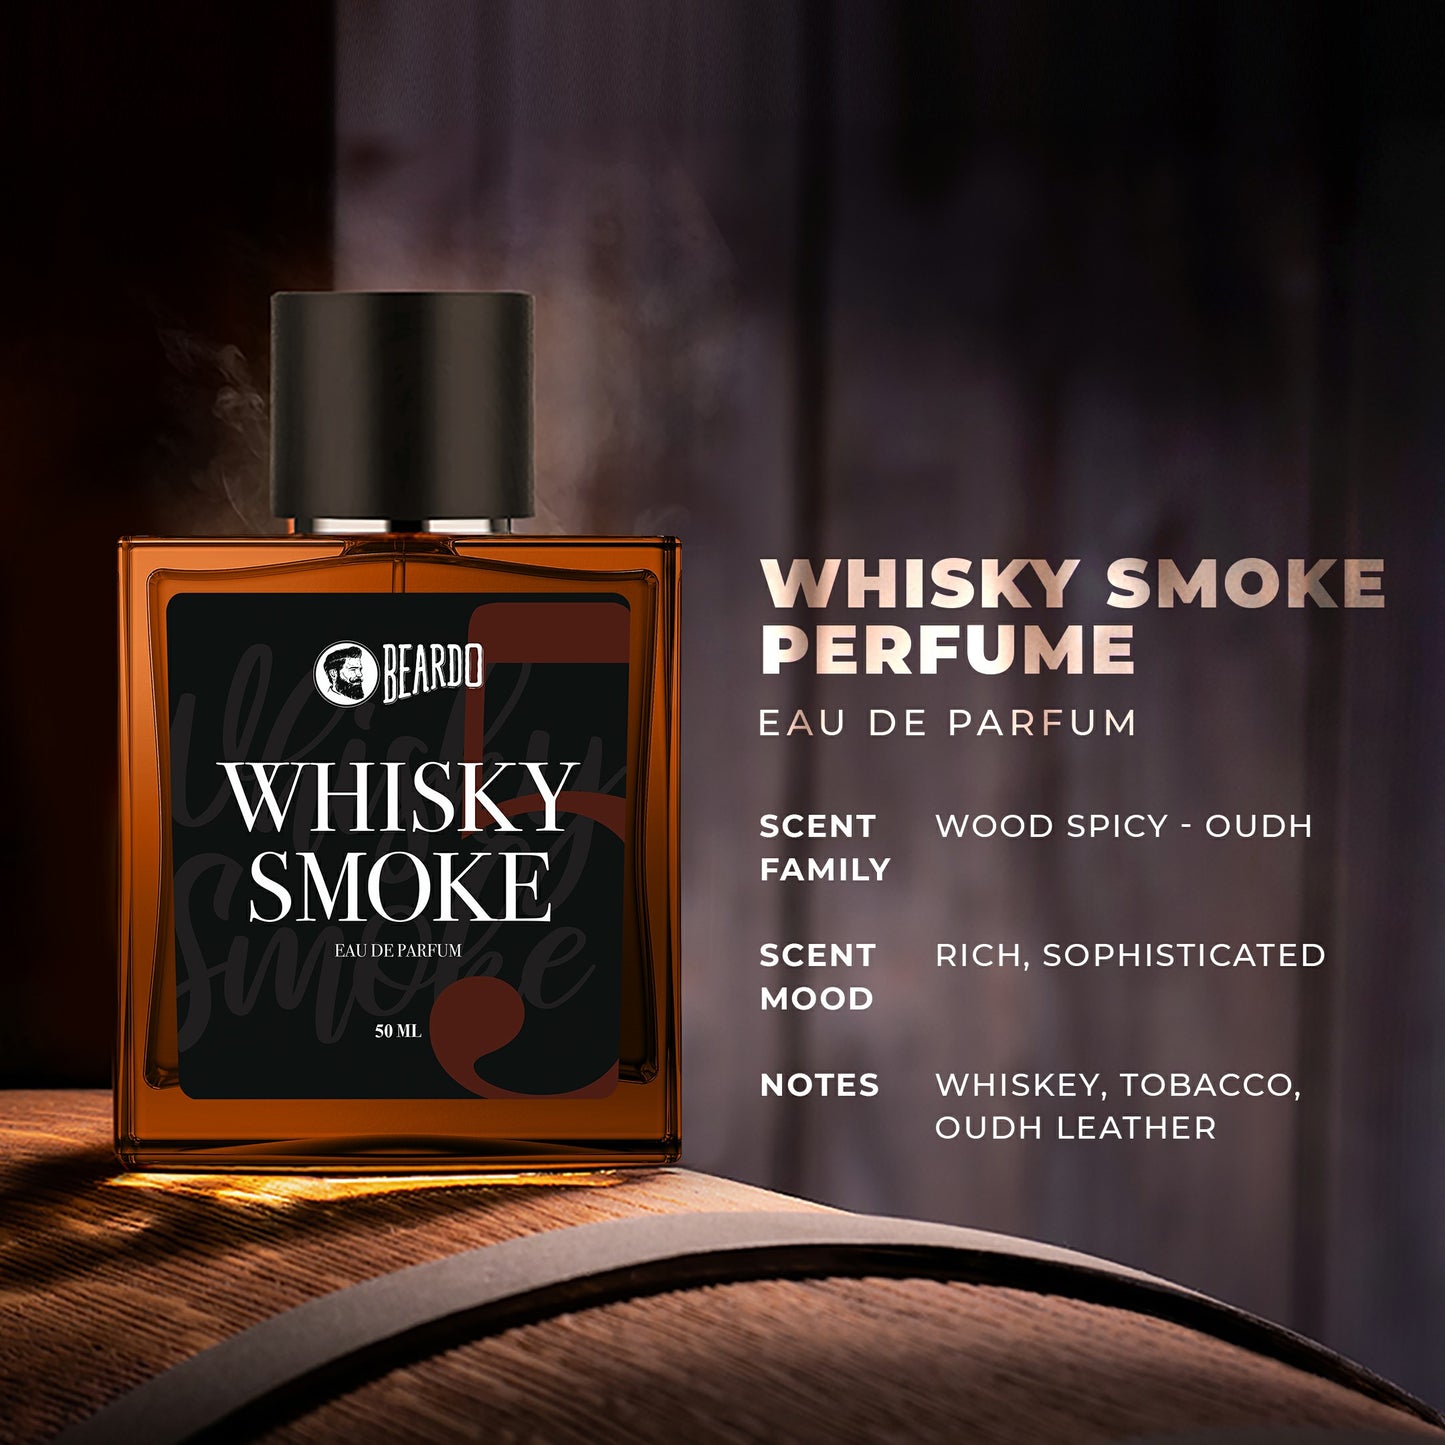 rich perfume, eau de parfum, wood spicy, spicy notes, spicy  frgarance. whiskey scent